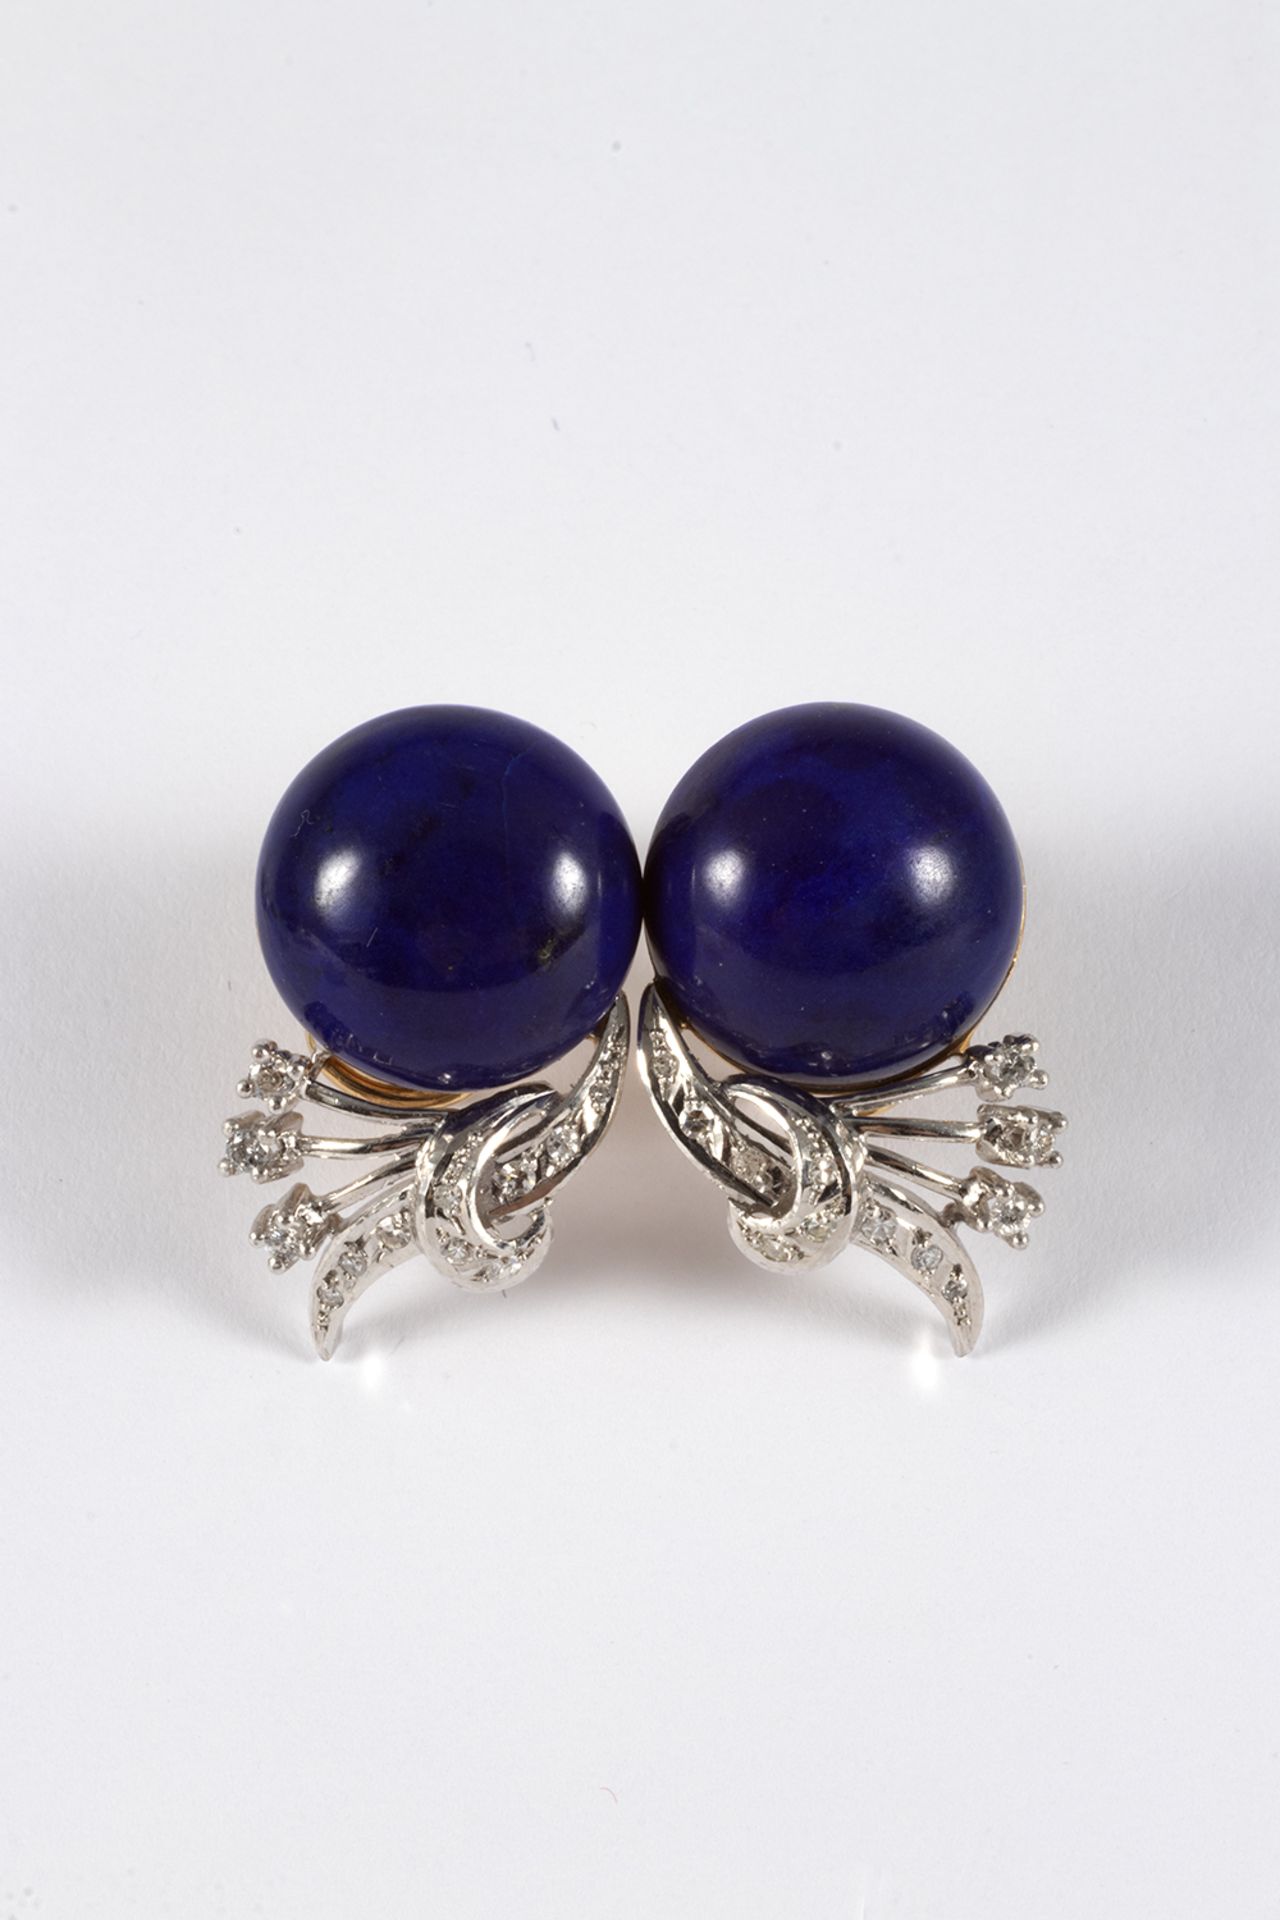 Earrings in two-tone gold, lapis lazuli and brilliant-cut diamonds.